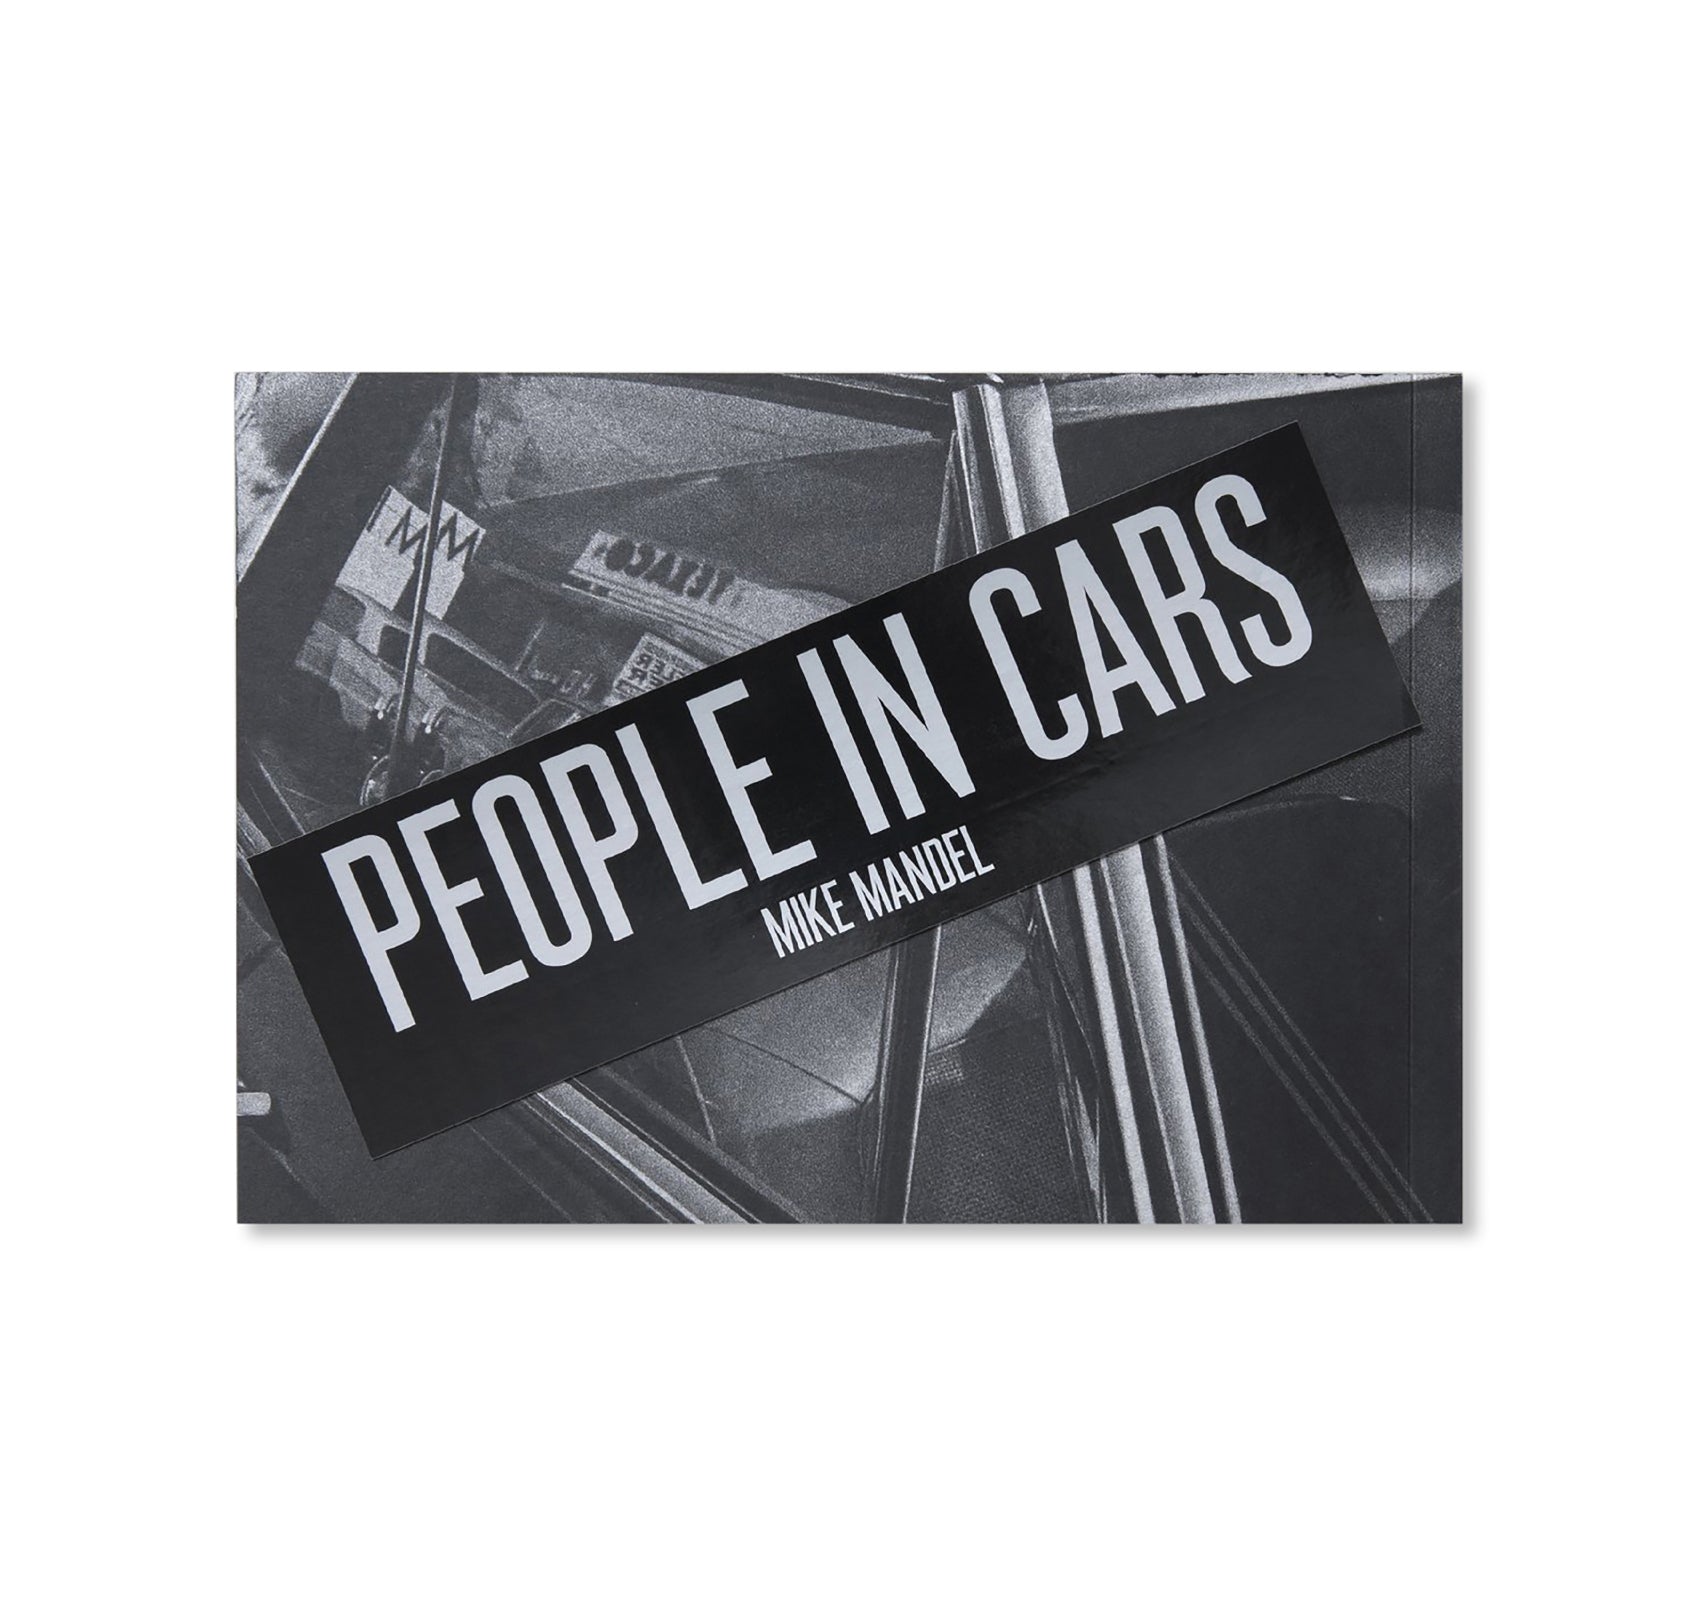 PEOPLE IN CARS by Mike Mandel